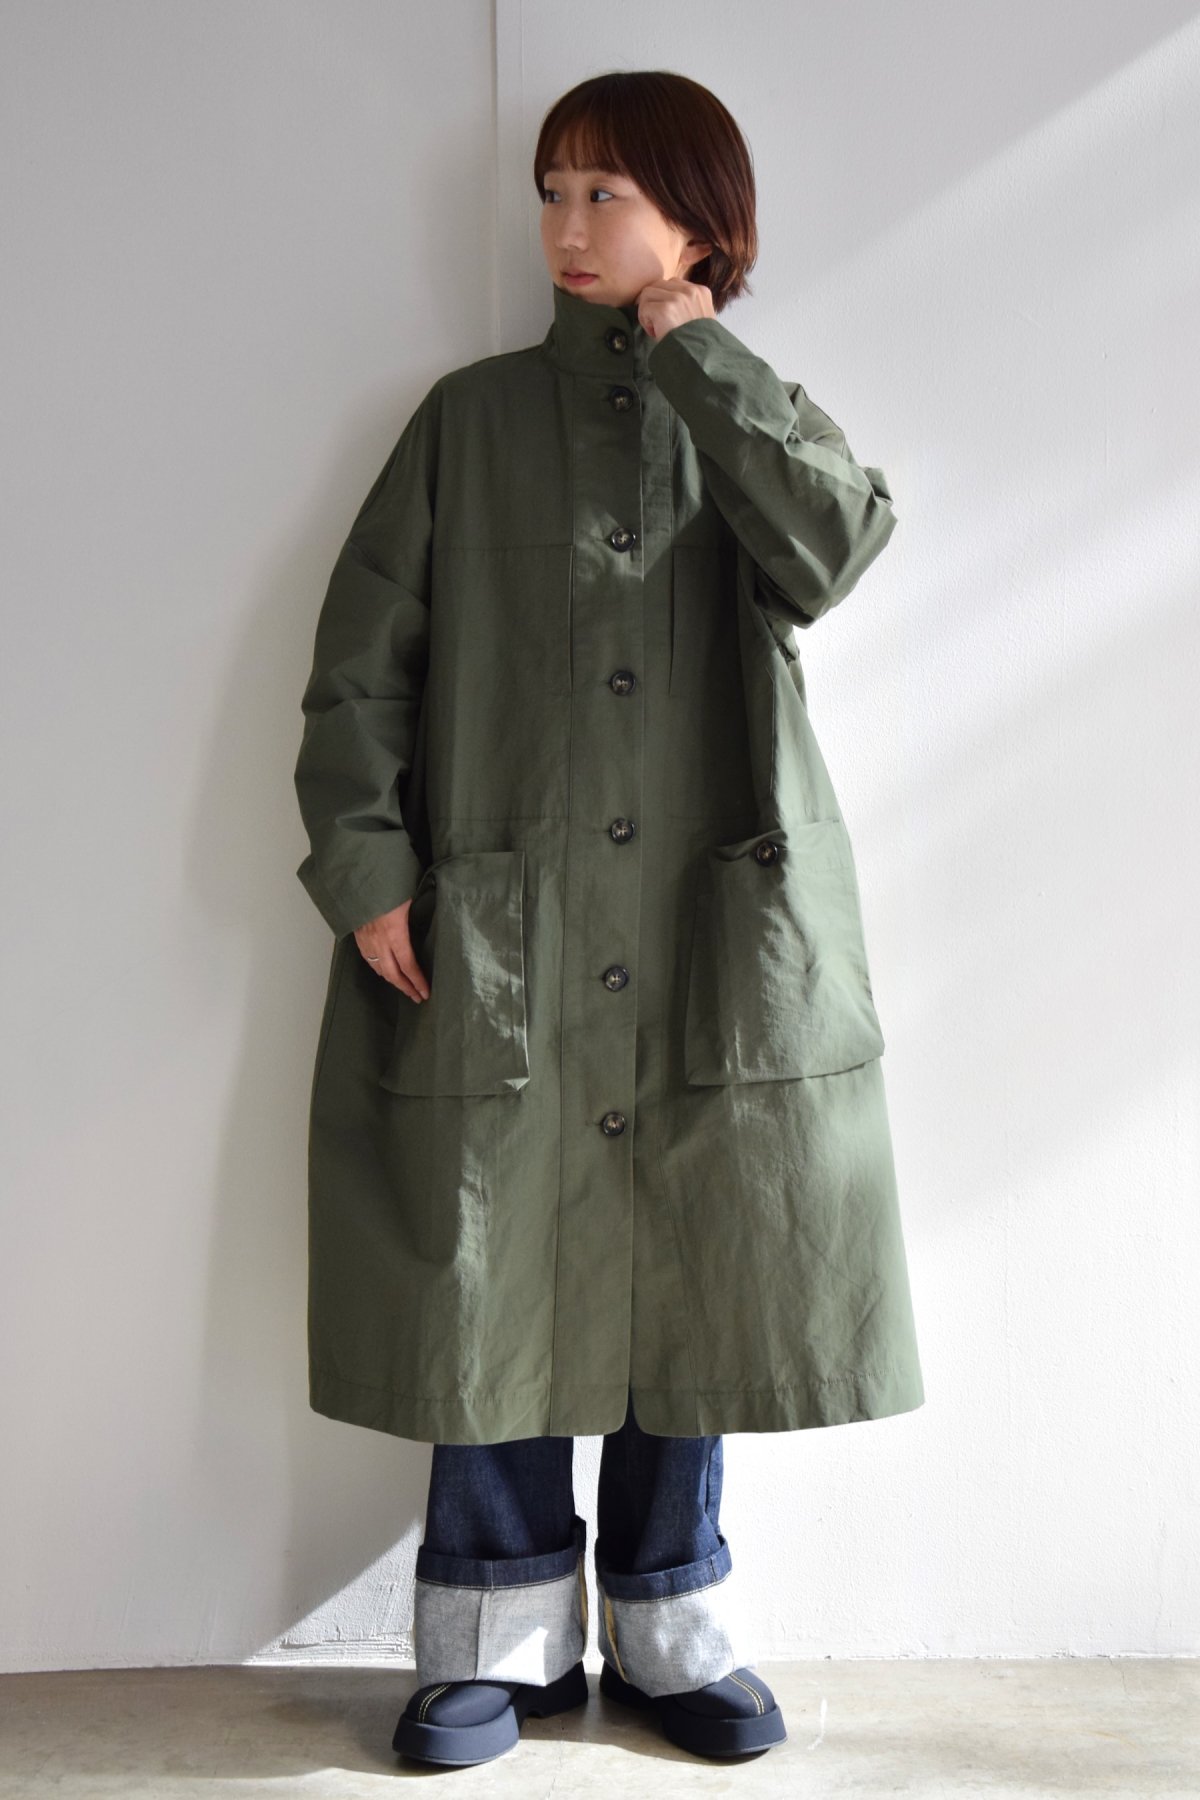 KLOKE / Transient Rain Jacket / Fatigue Green